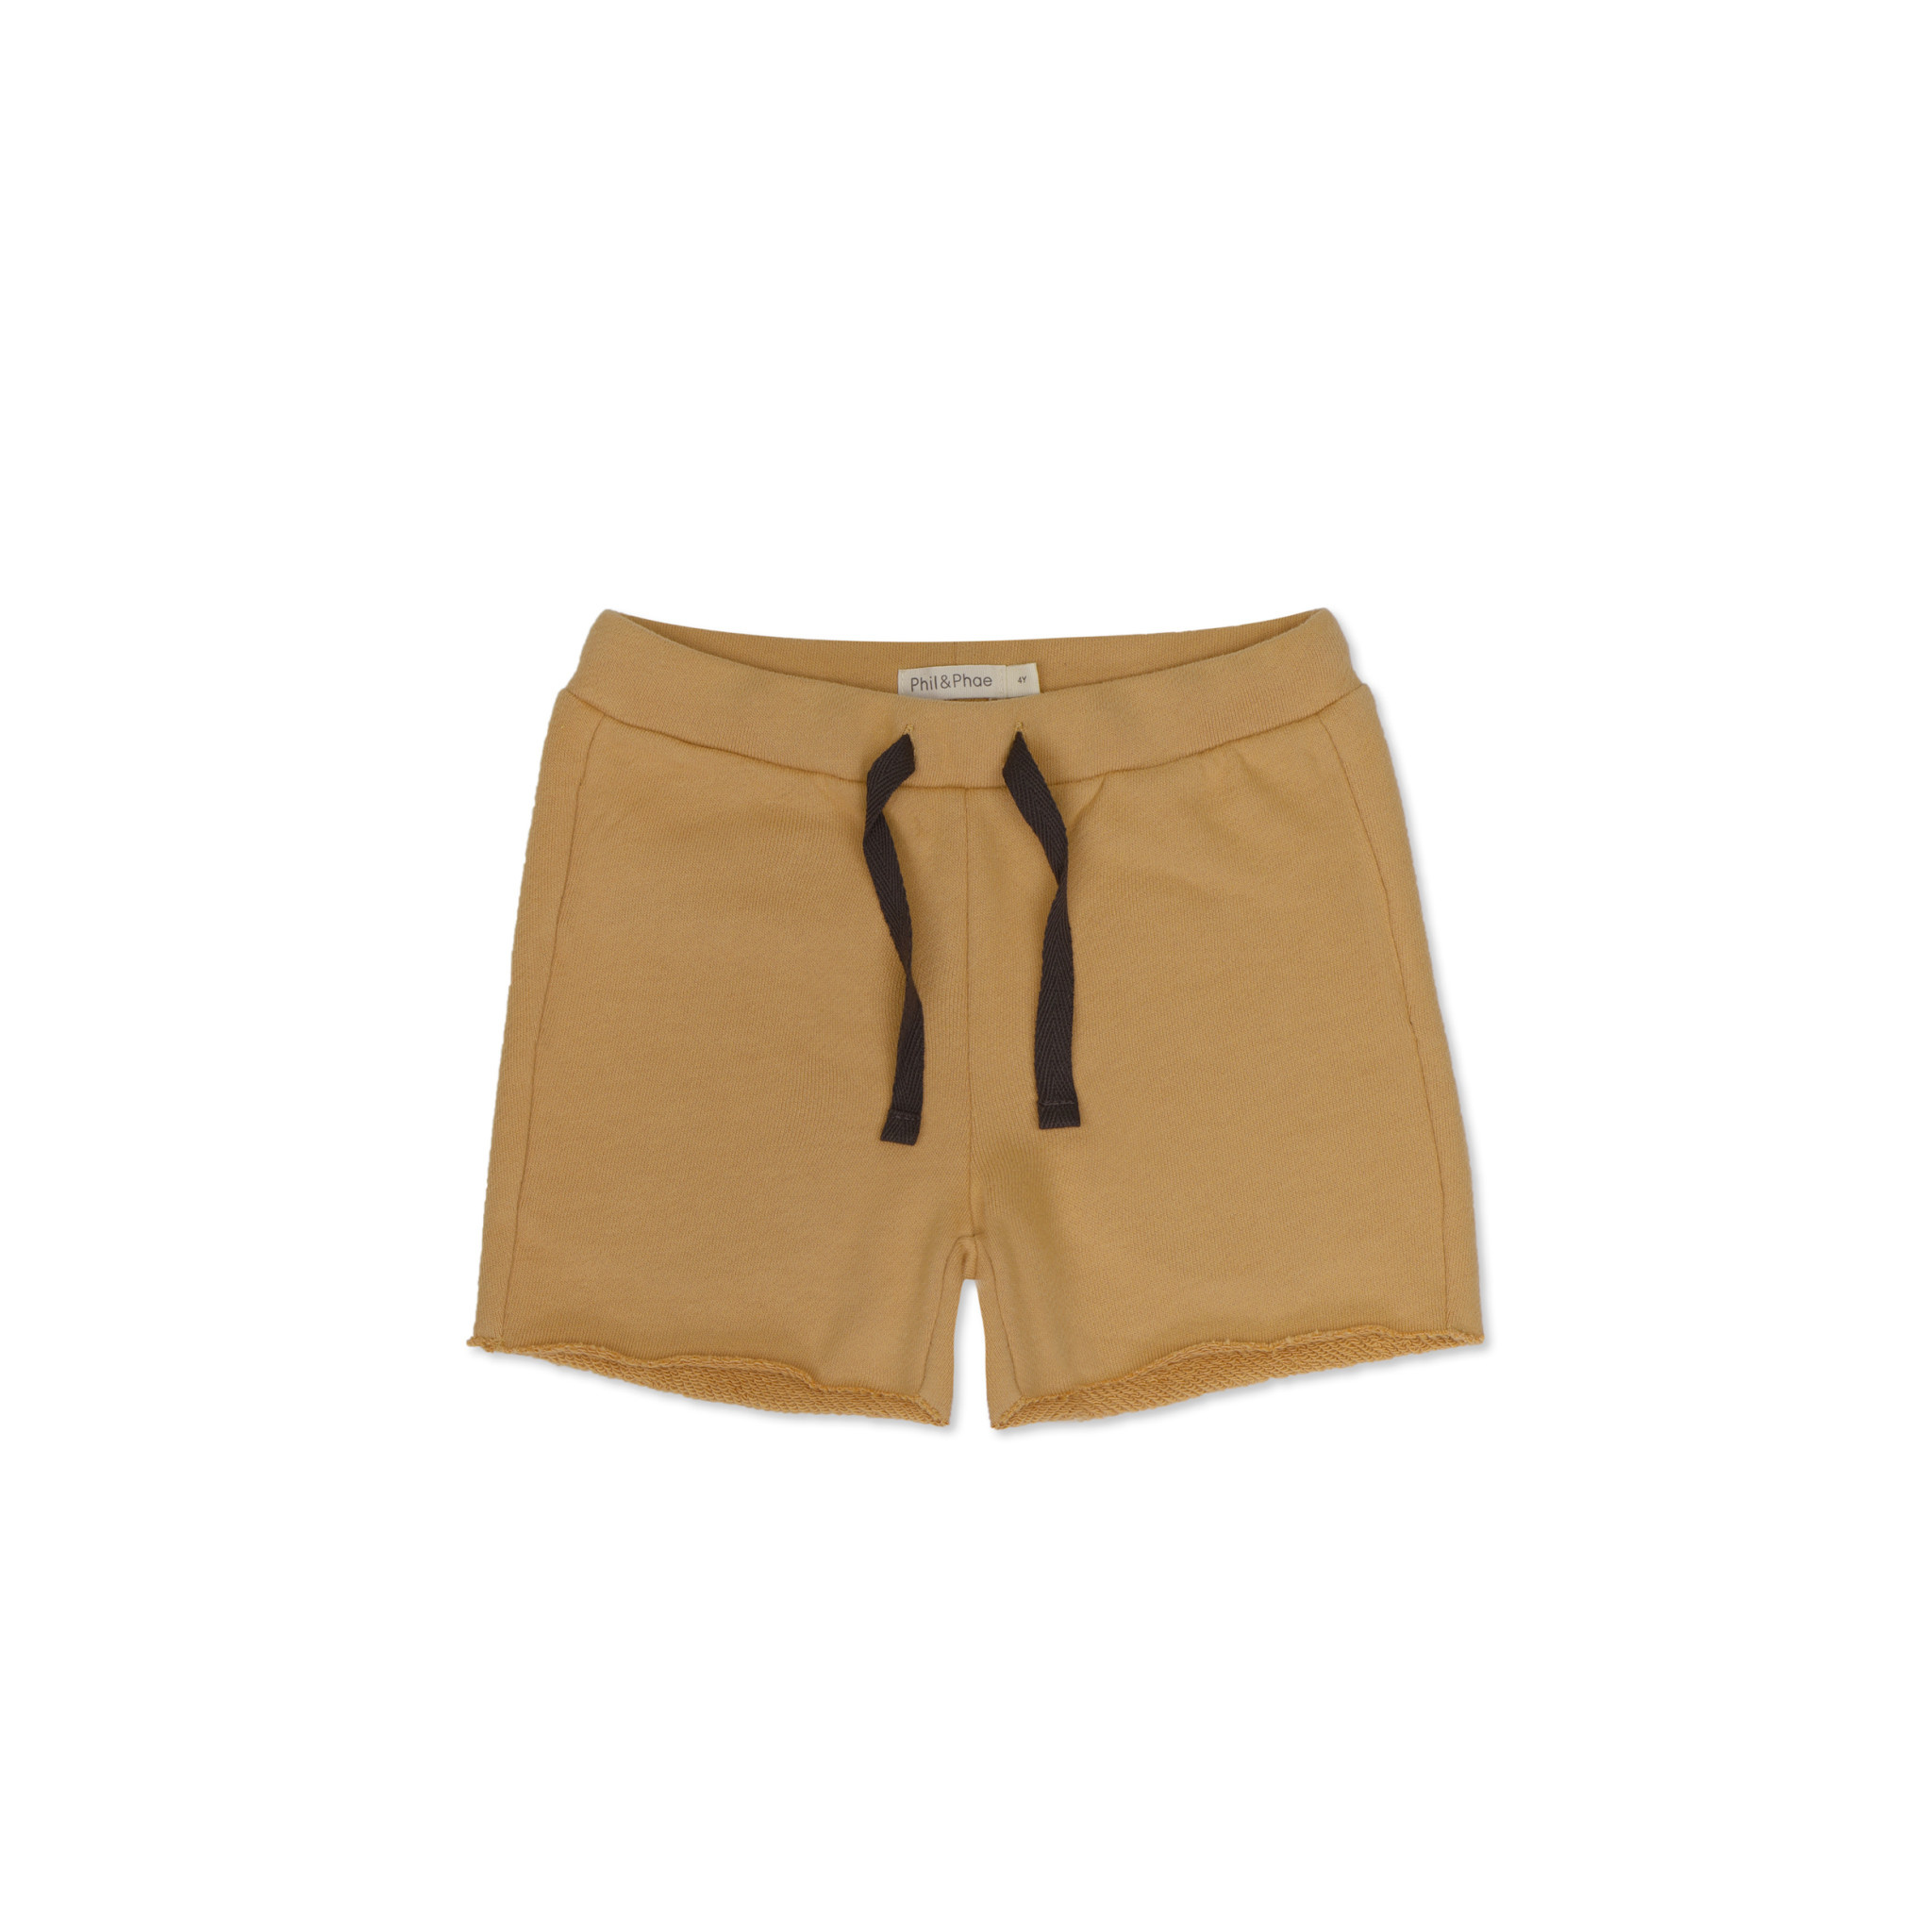 Chunky baby shorts - artichoke-1